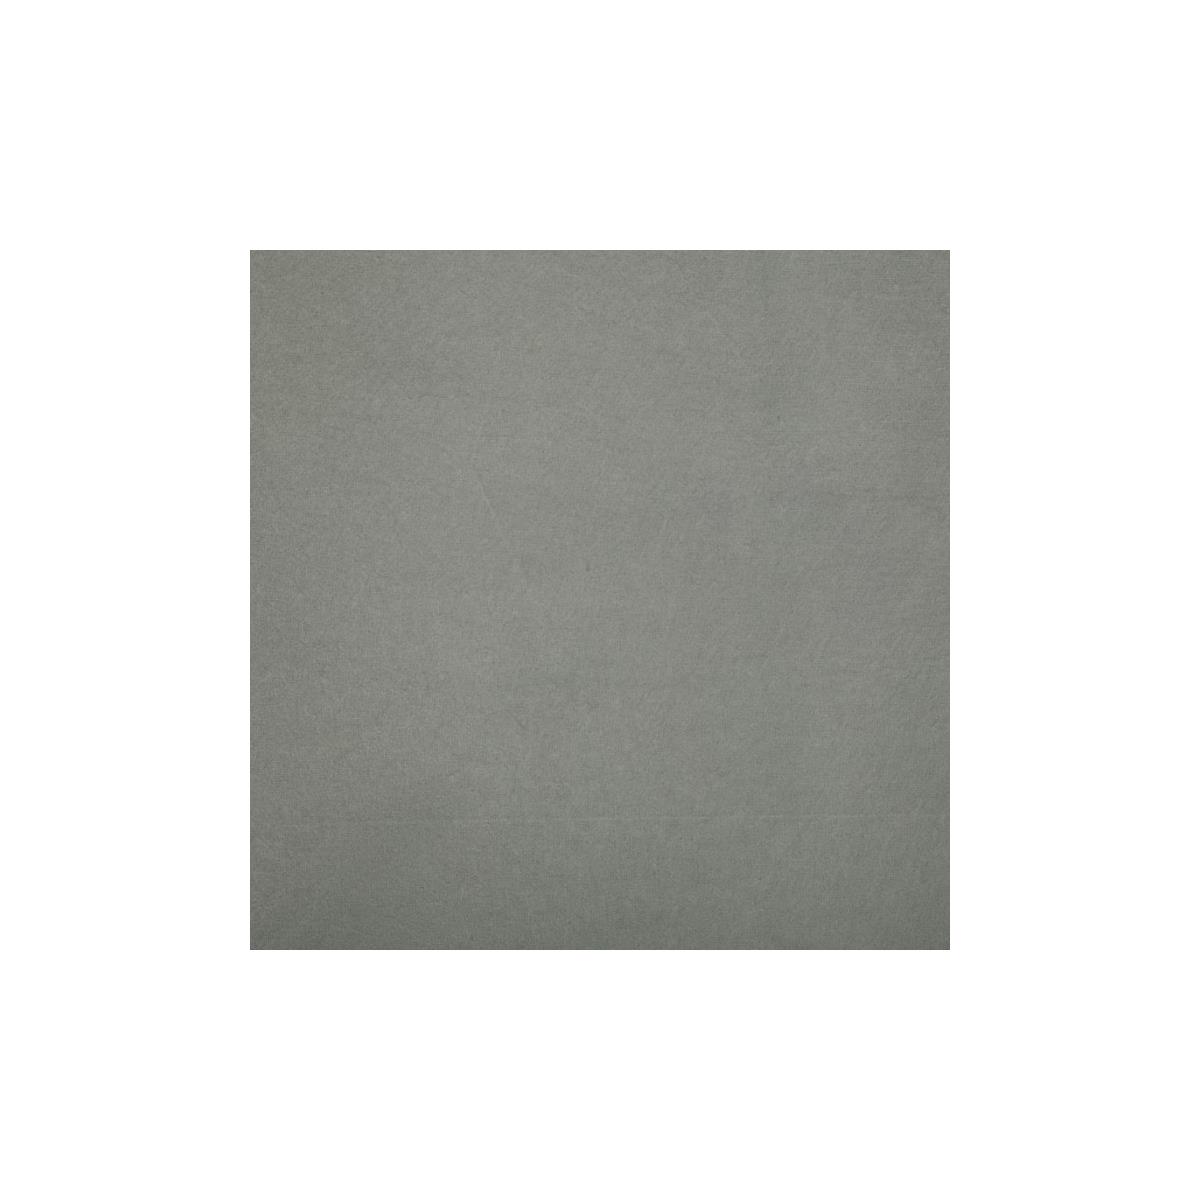 

Studio Assets 10x12' Hand-Painted Muslin Backdrop, Light Gray